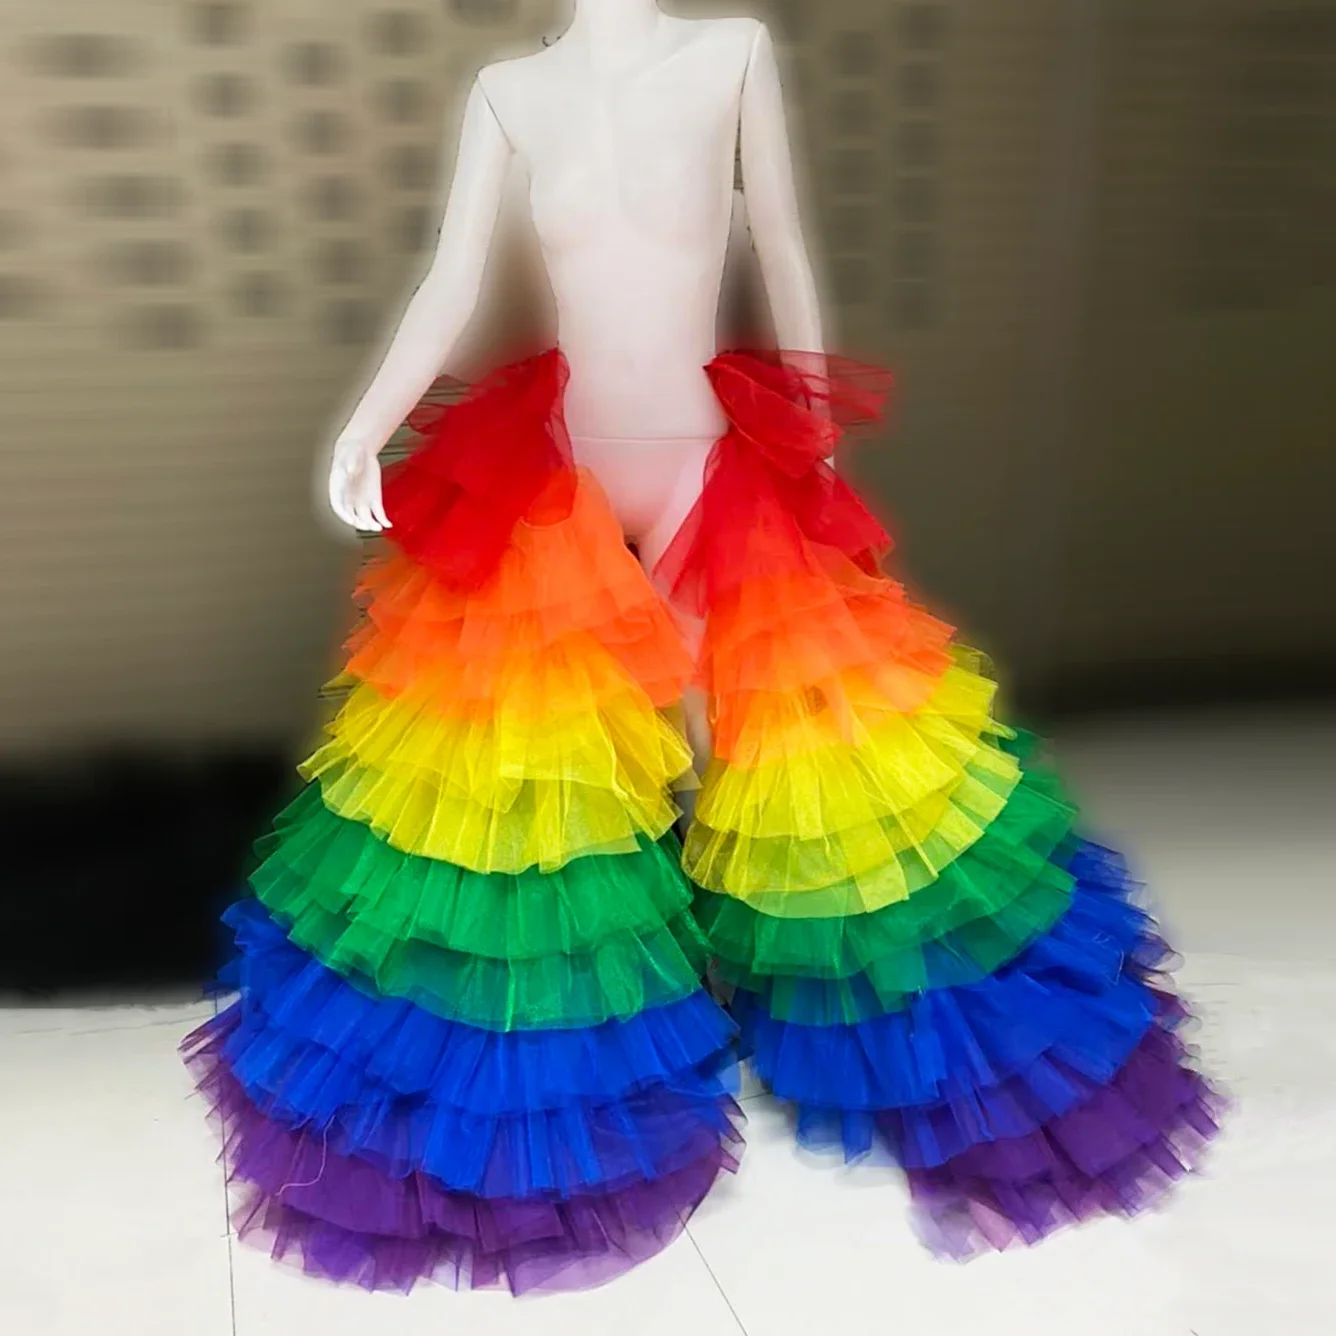 

Rainbow Puffy Tulle Detachable Skirt Ball Gown Tiered Colorful Tutu Overskirt Women Wedding Bridal Skirt Overlay Removable Skirt